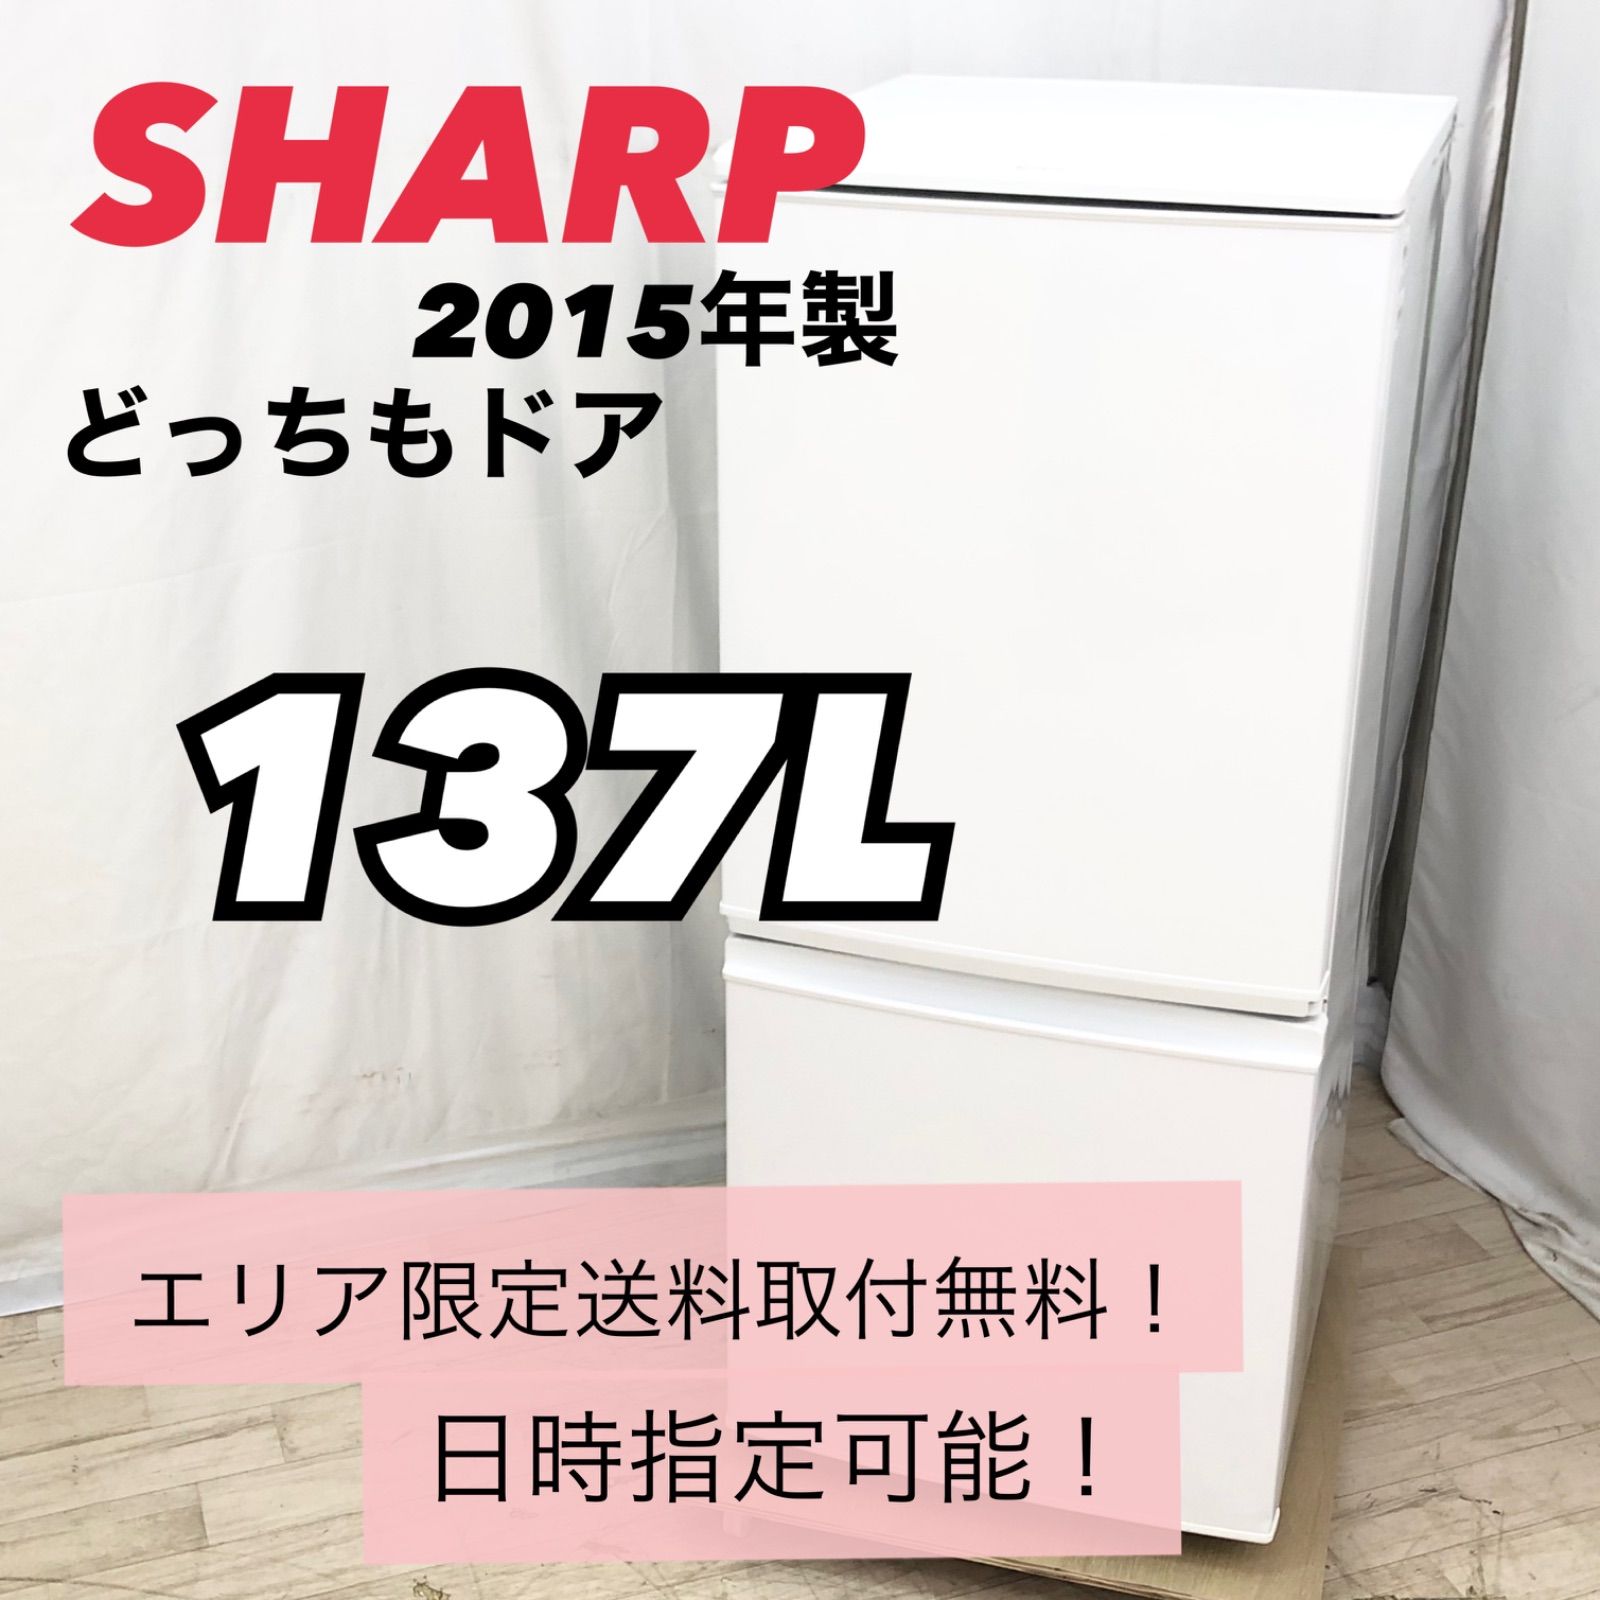 SHARP シャープ 2ドア冷蔵庫 137L SJ-D14A-W 2015年製